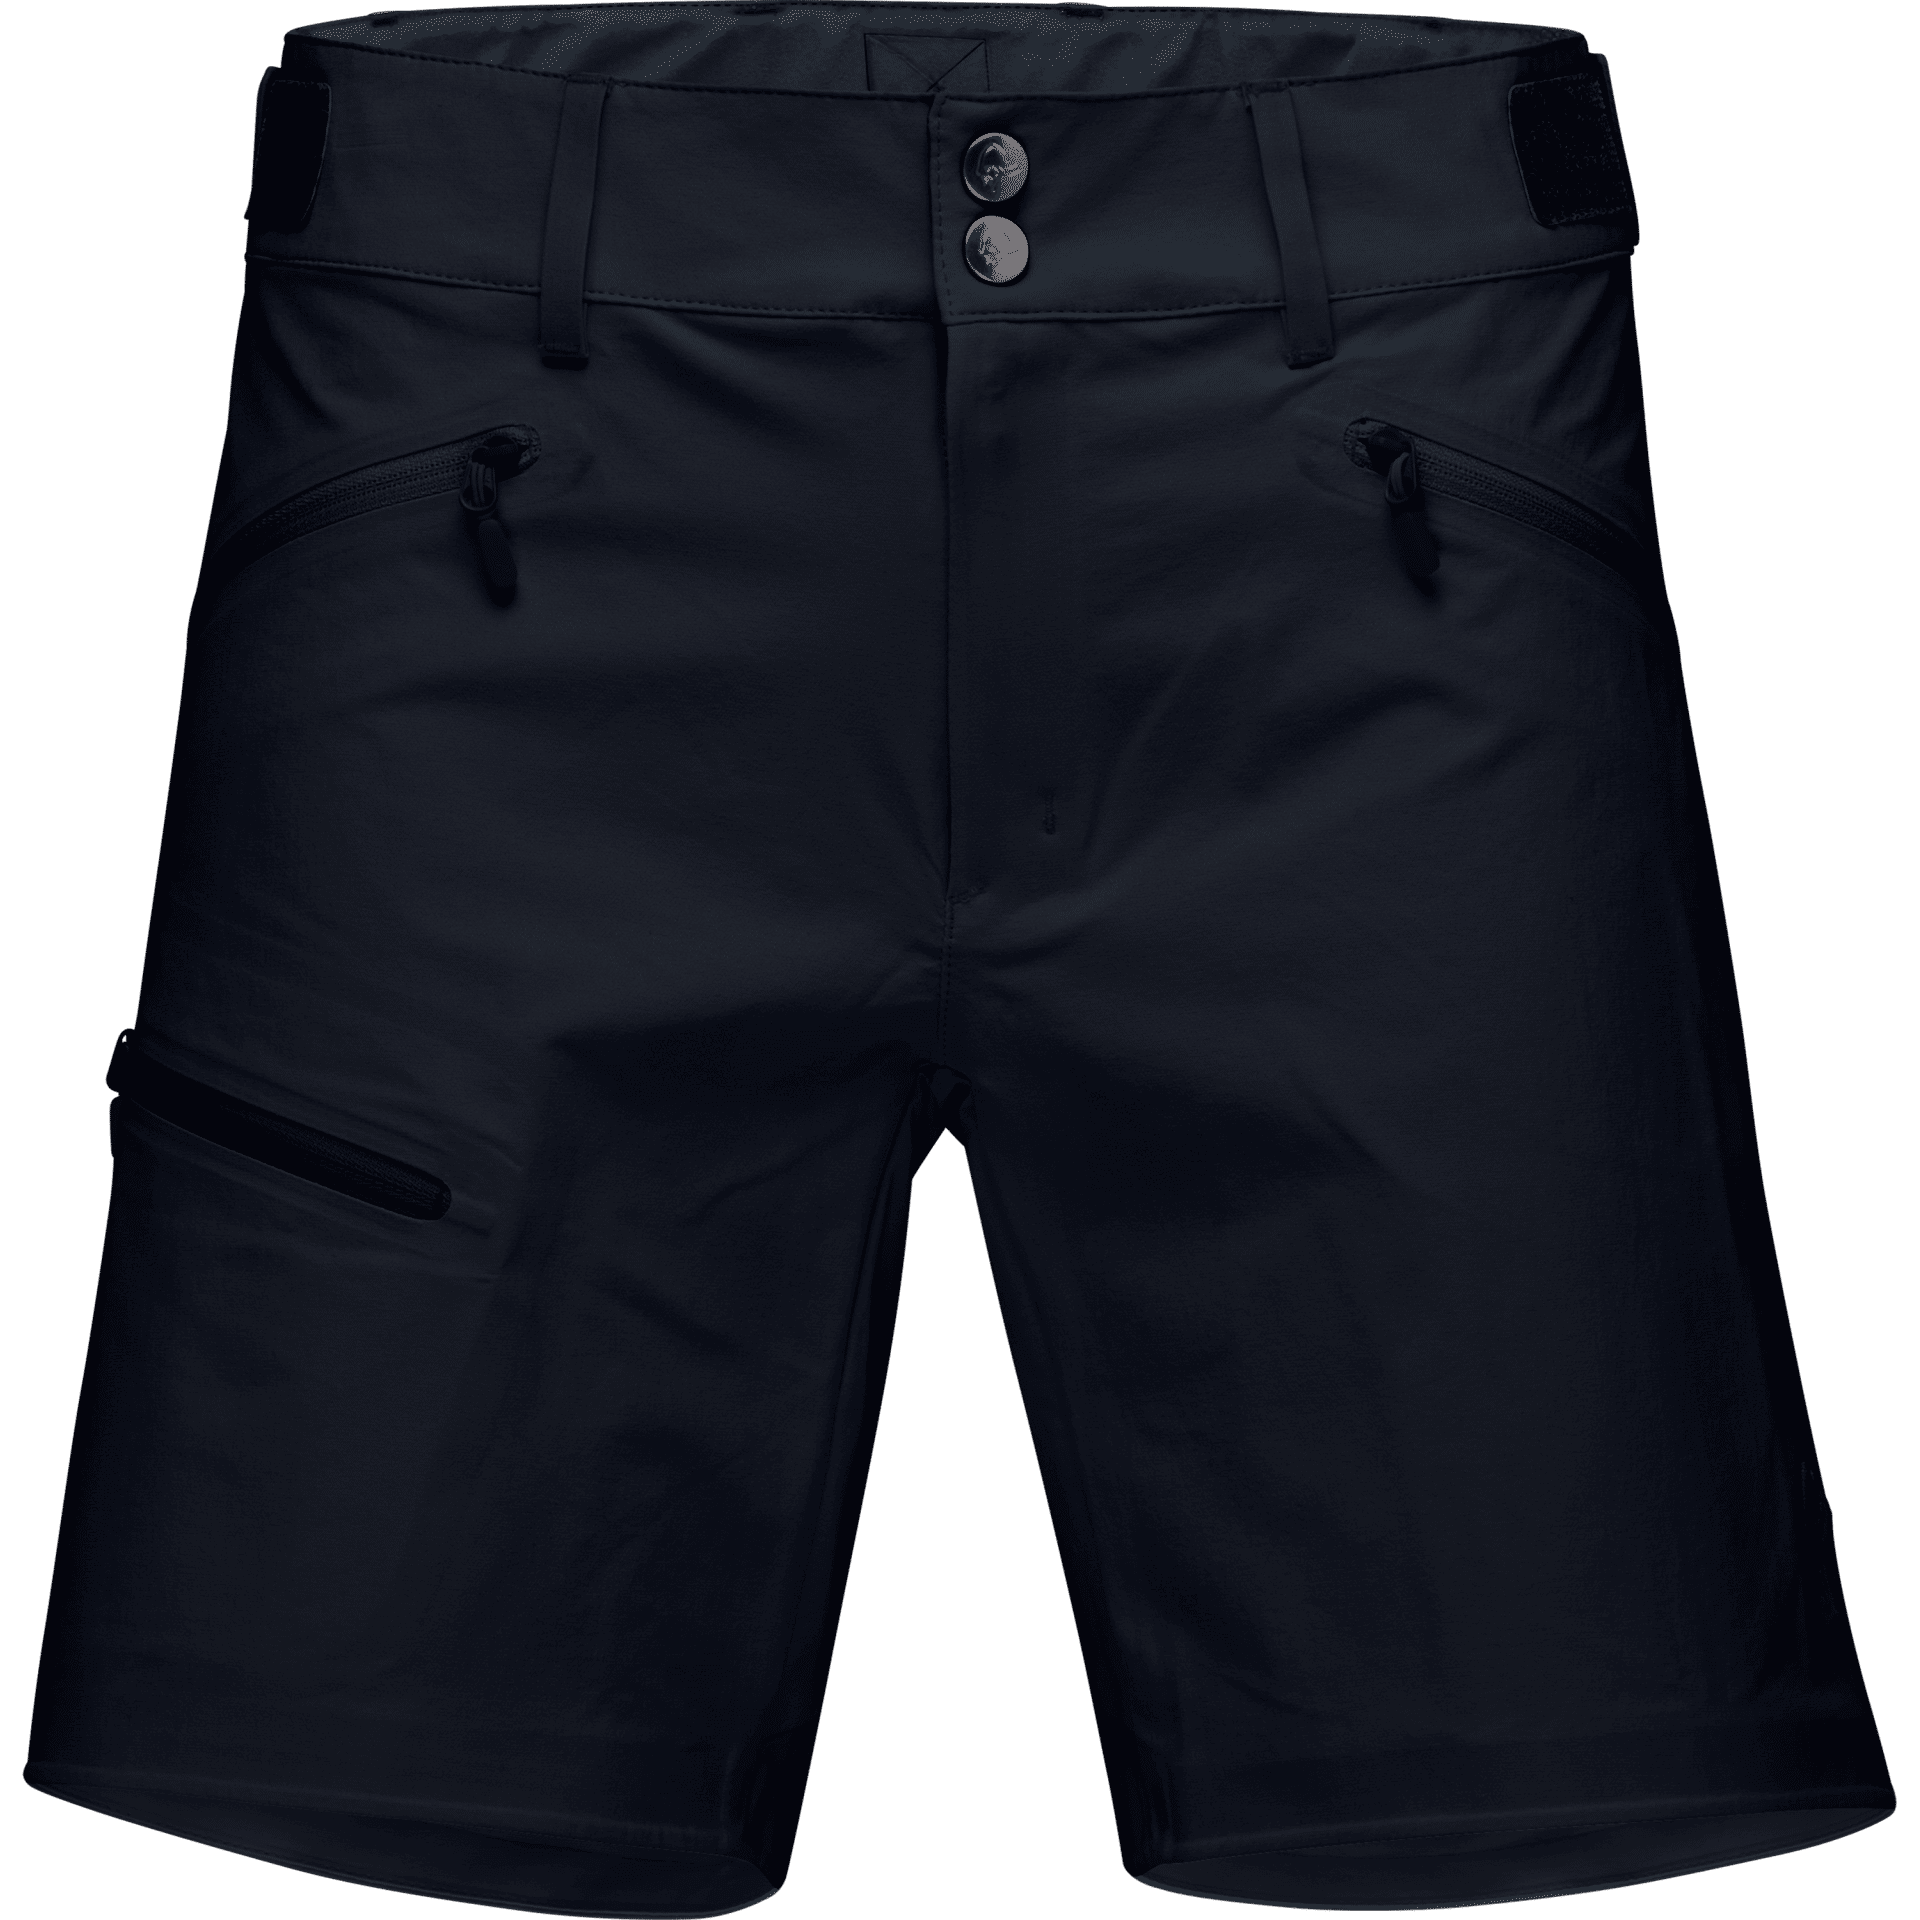 Nørrona Falketind Flex1 Shorts - Hiking shorts - Women's